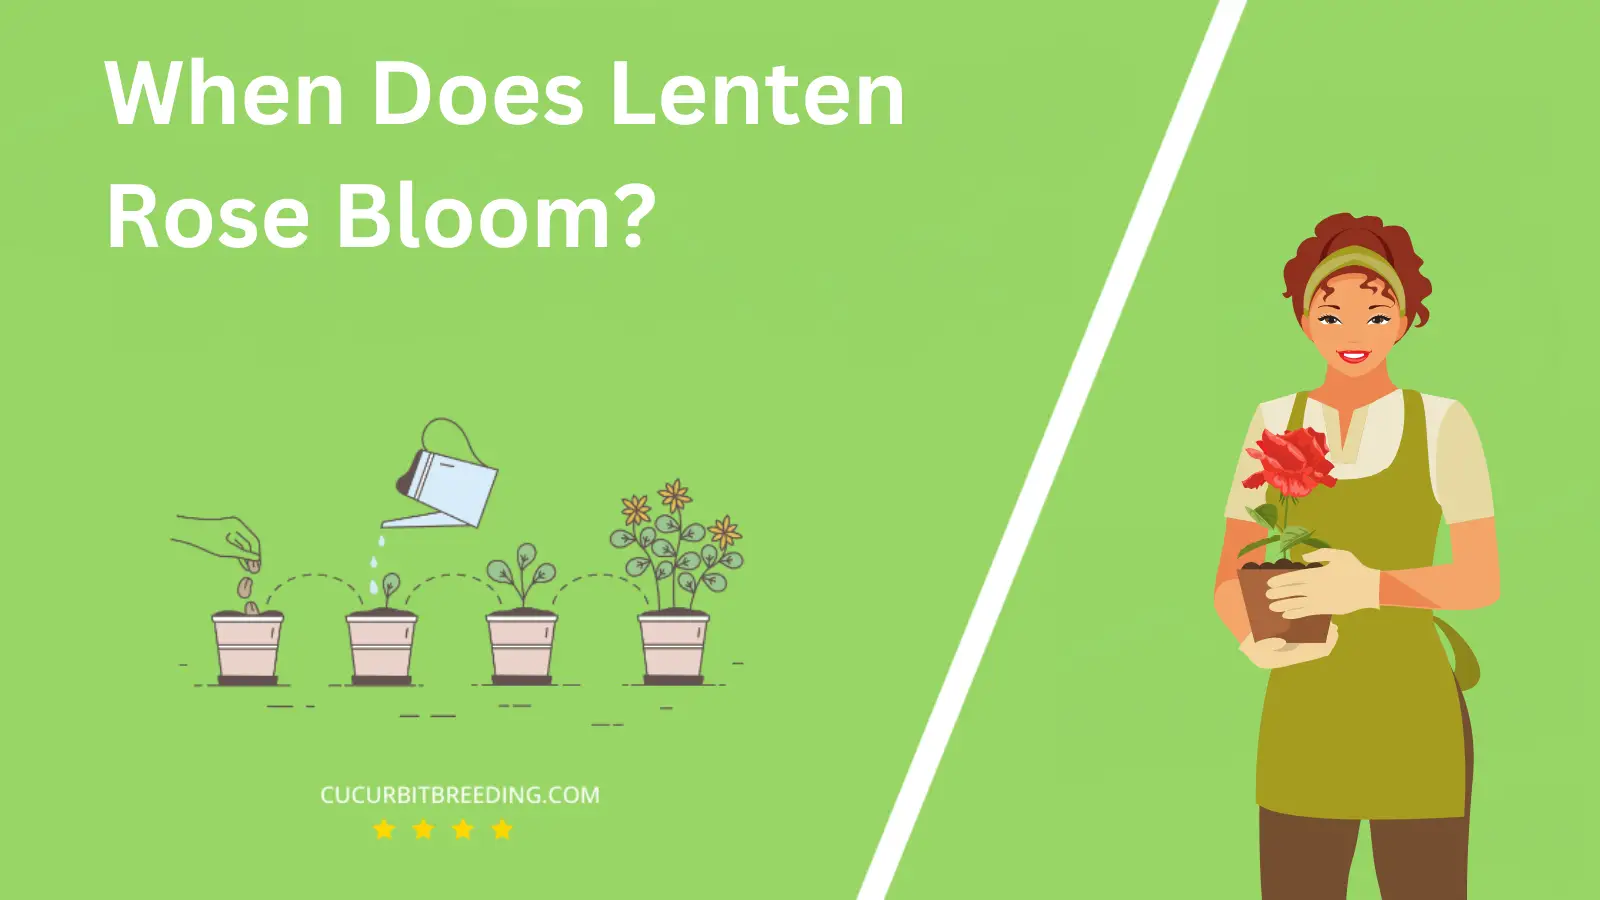 When Does Lenten Rose Bloom?